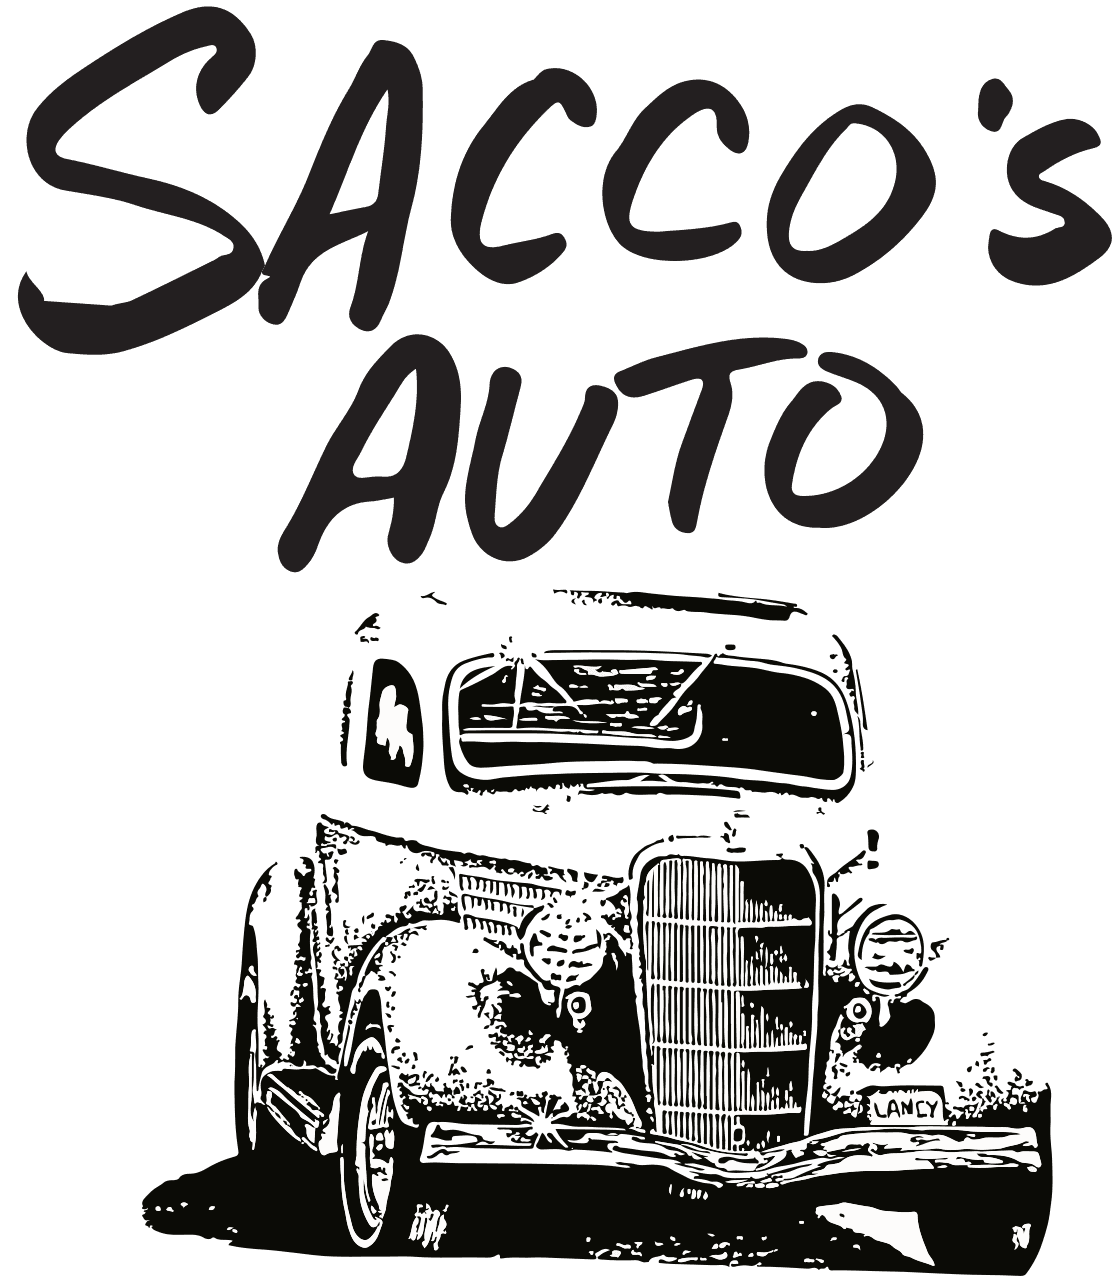 Sacco's Auto Repair Logo